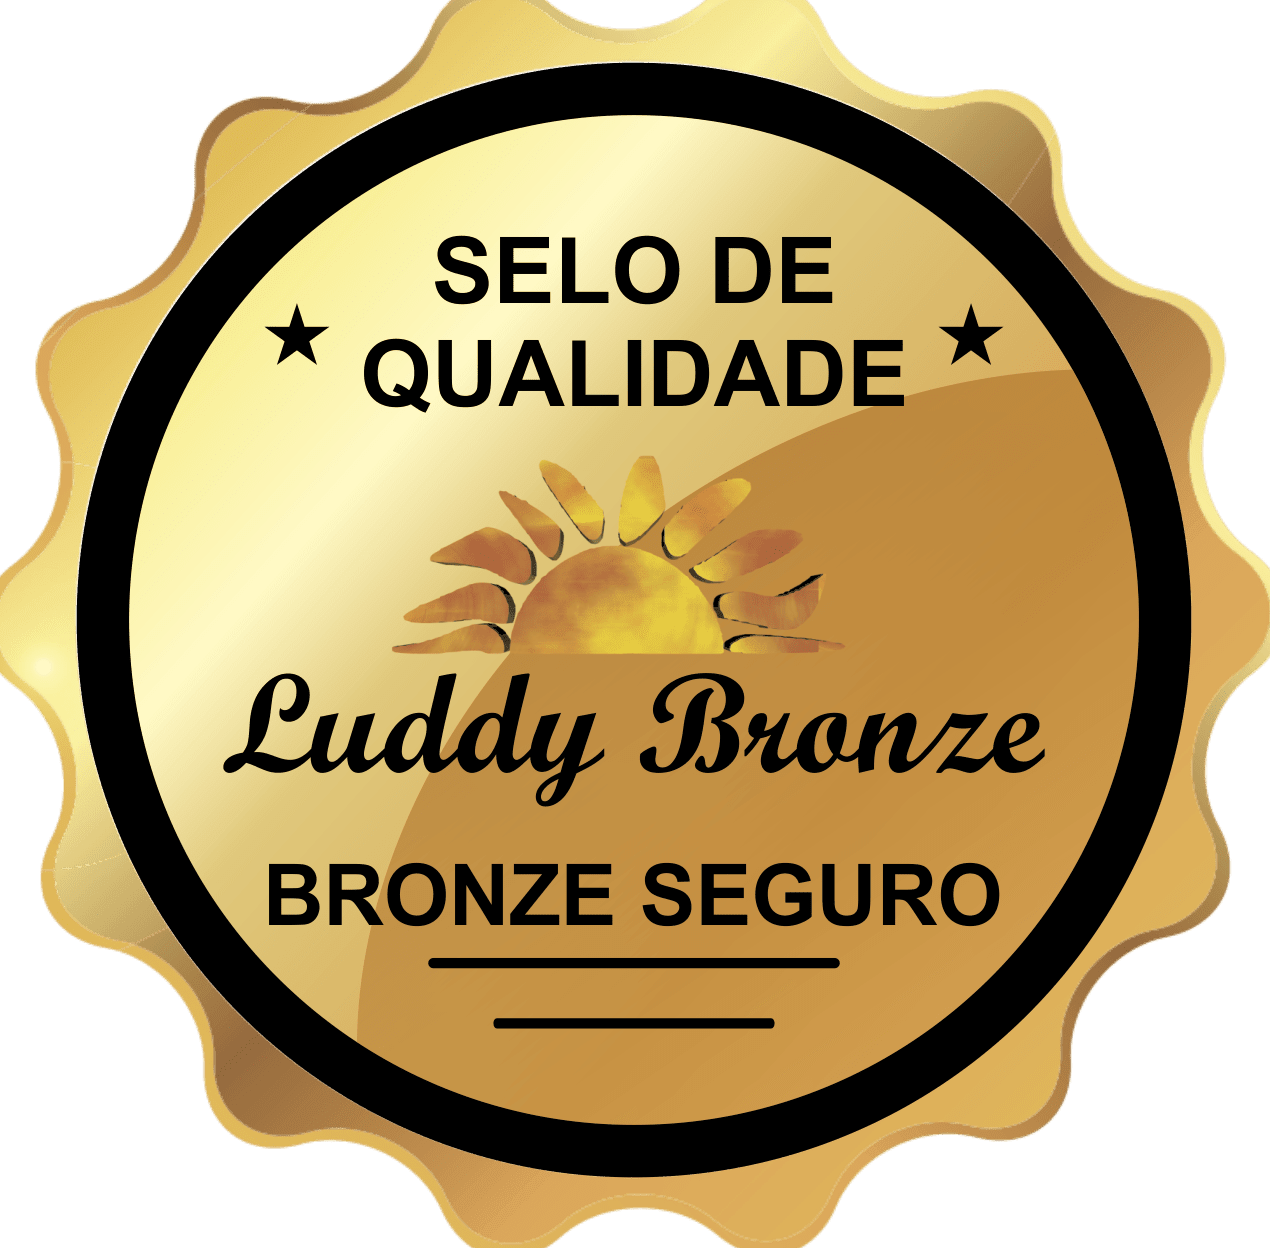 Luddy Bronze